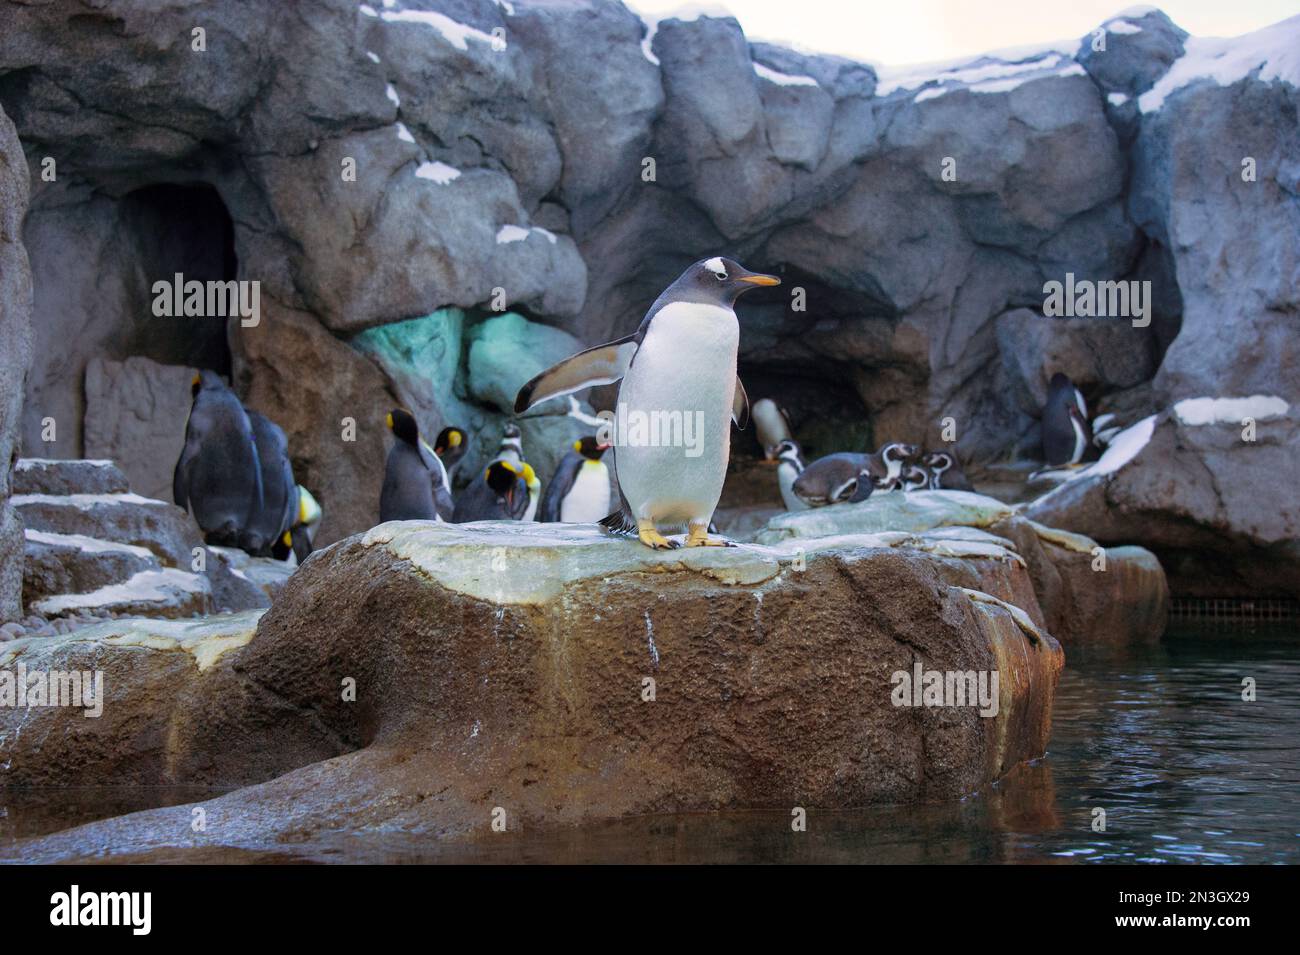 Penguins in an enclosure at a zoo; Calgary, Alberta, Canada Stock Photo